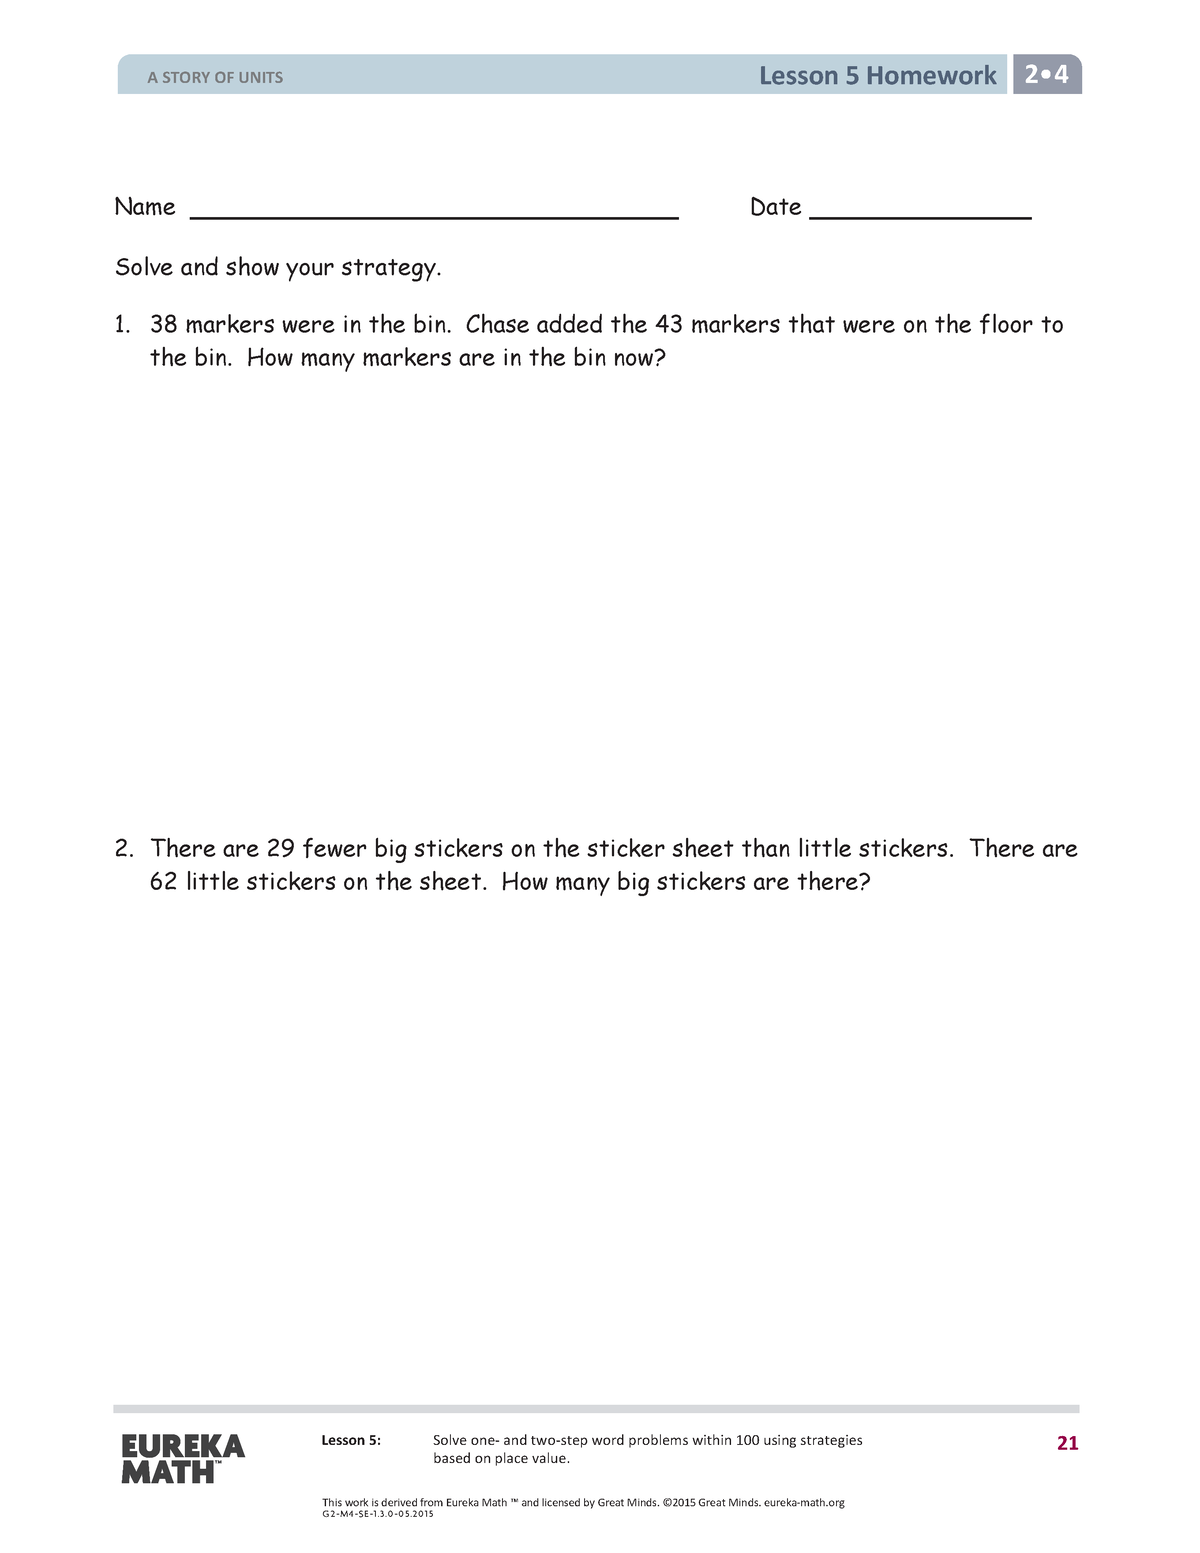 eureka math lesson 5 homework 5.4 answer key